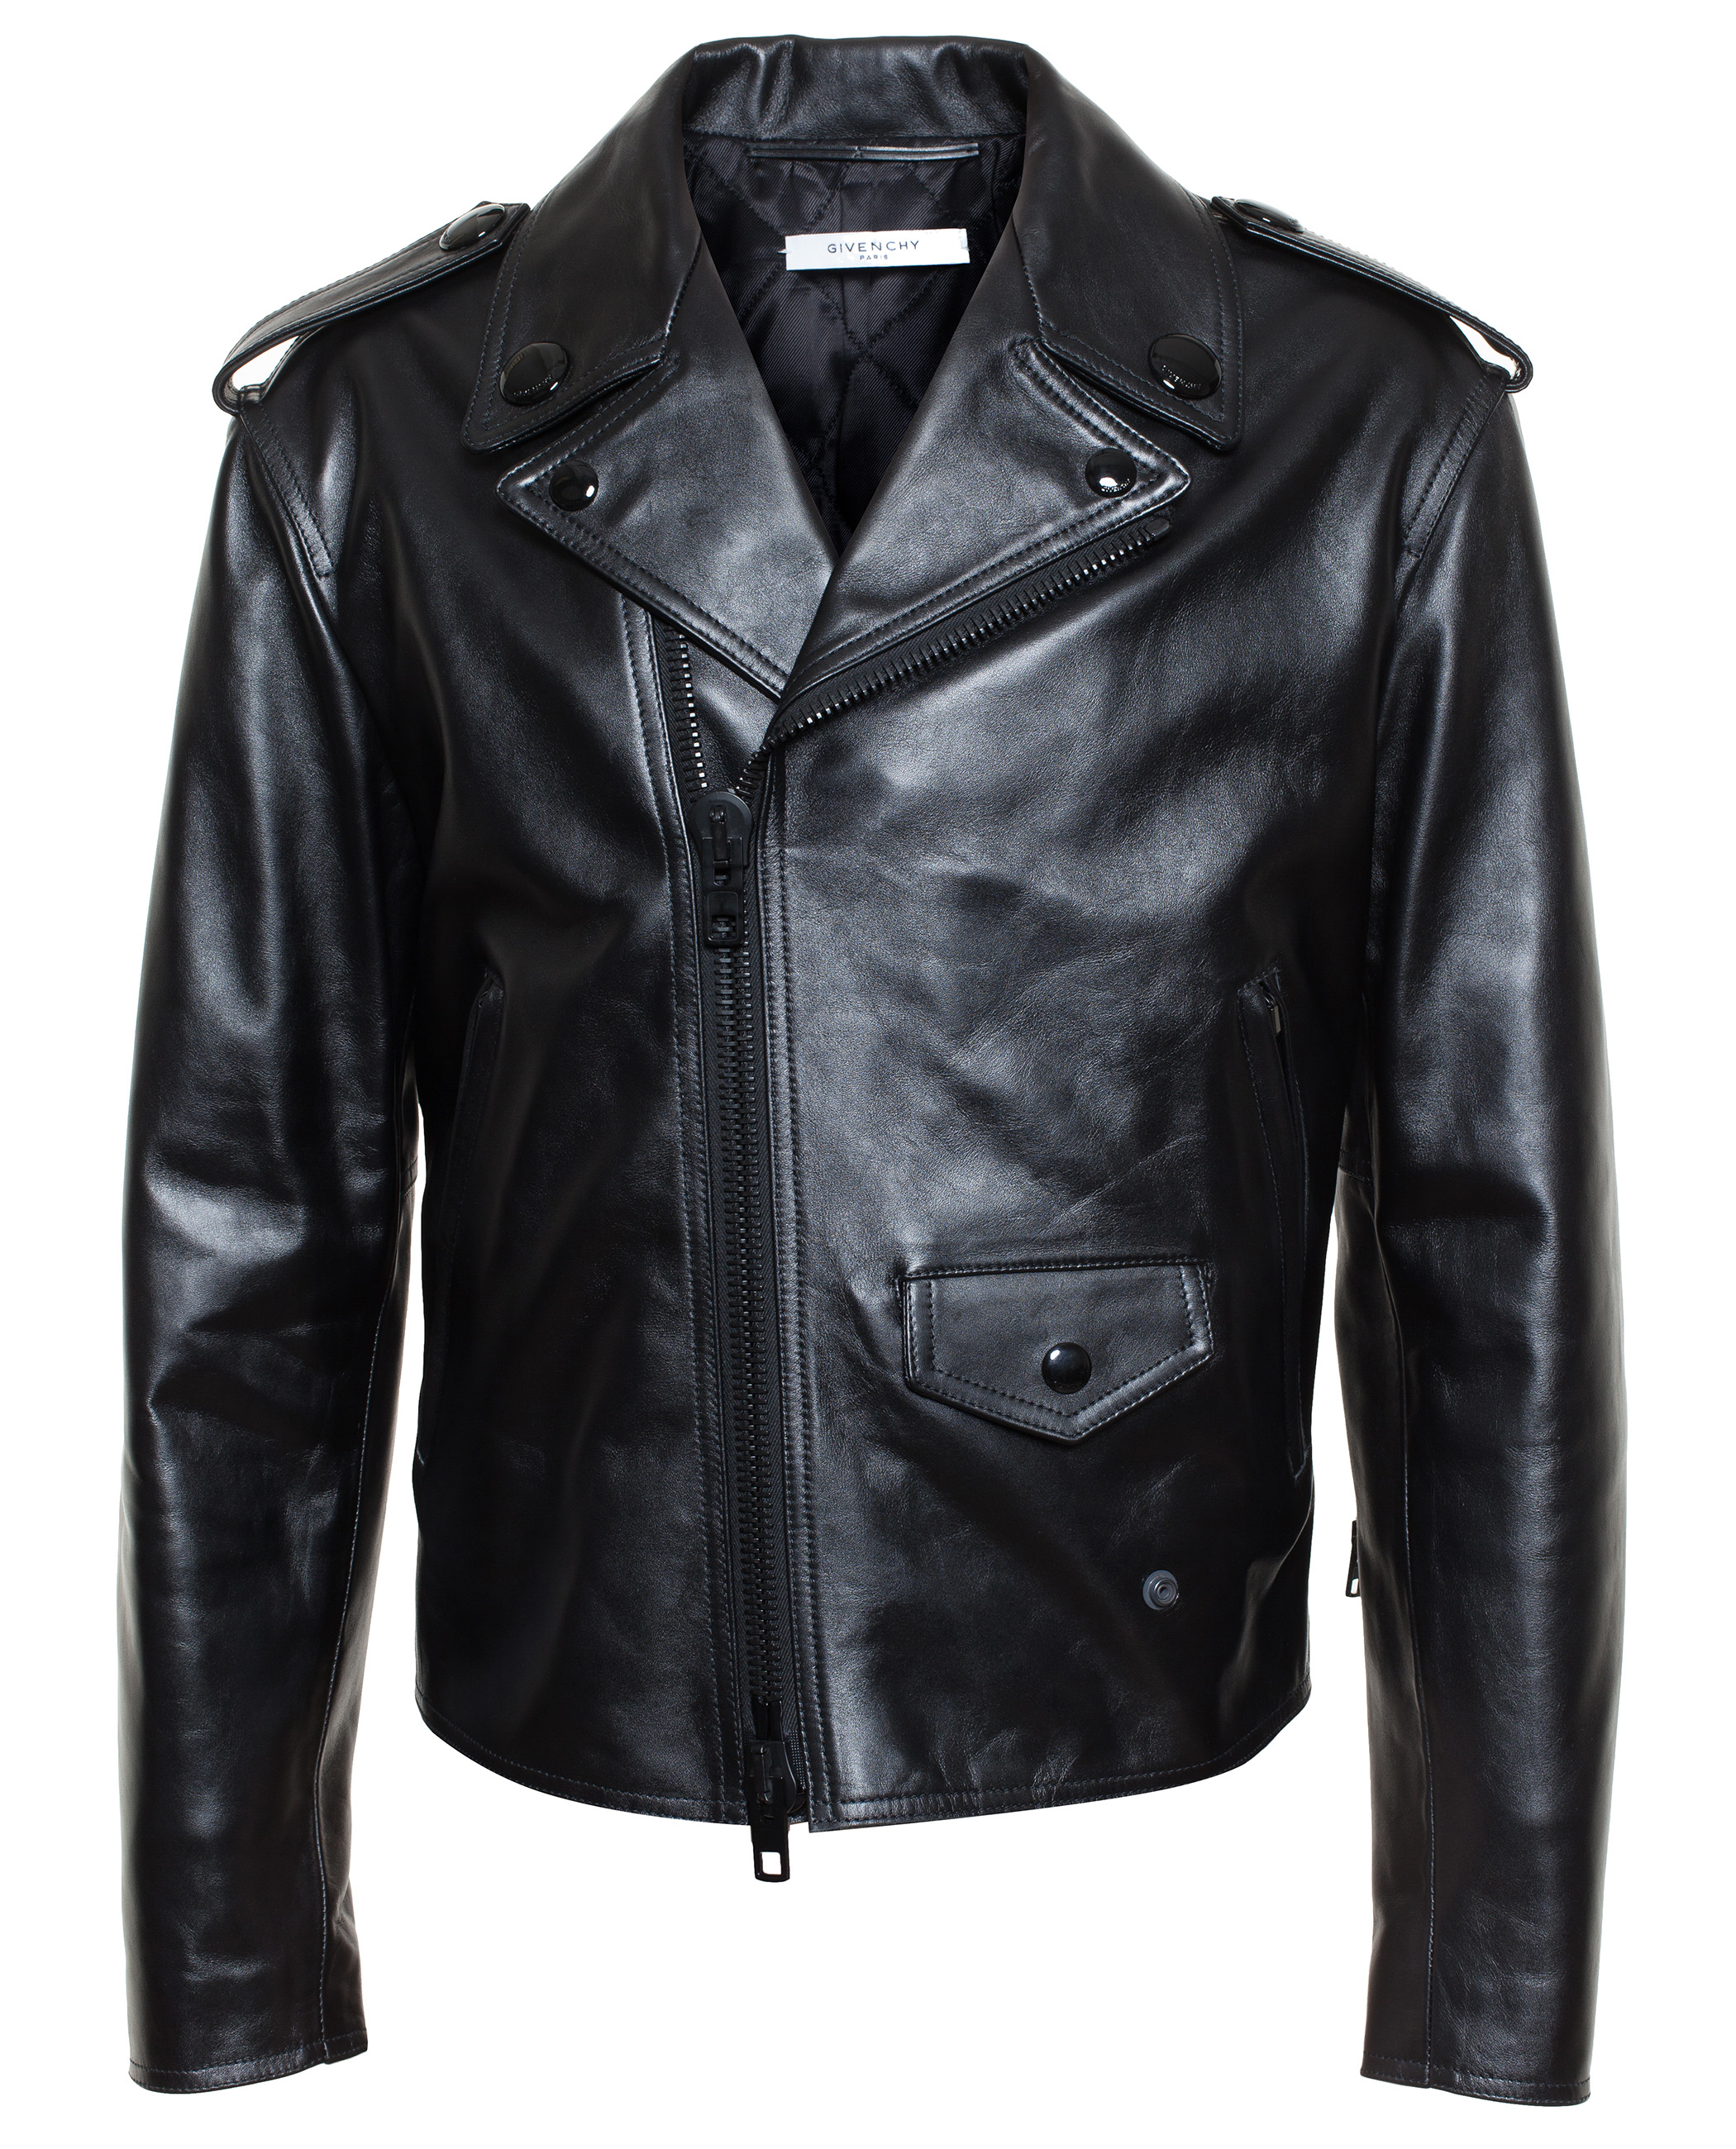 Givenchy Leather Biker Jacket in Black